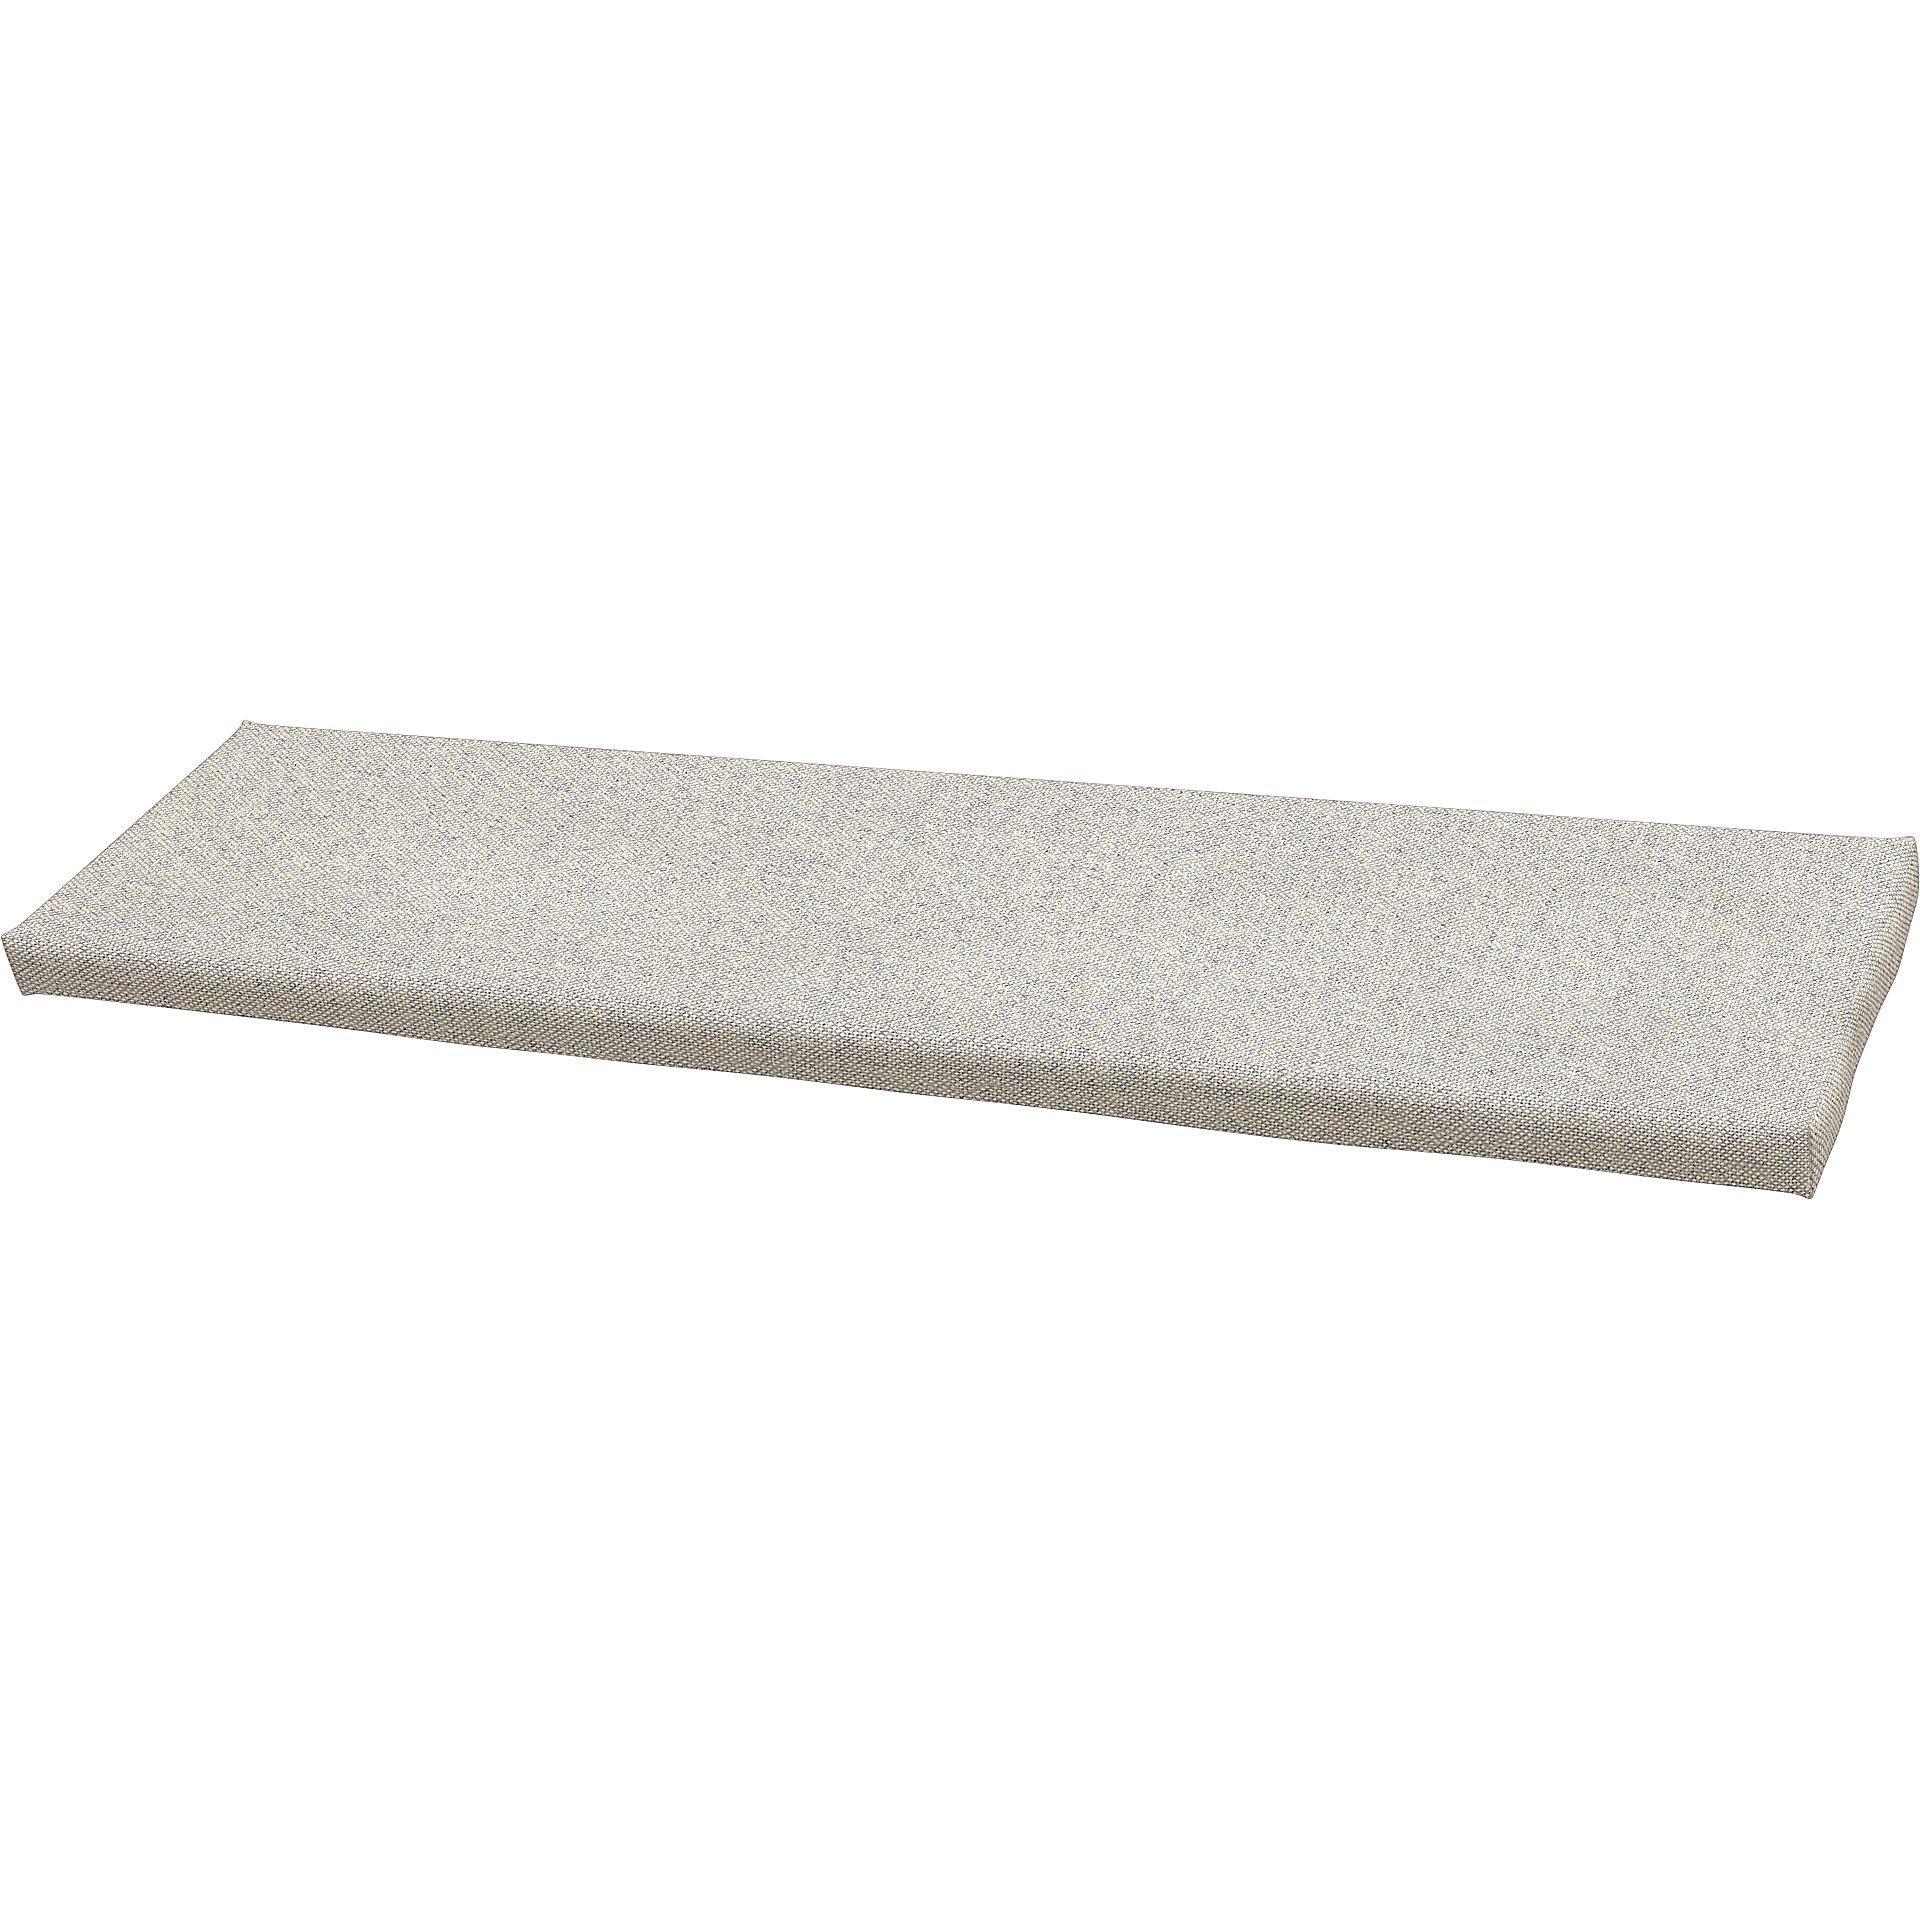 IKEA - Universal bench cushion cover 120x35x3,5 cm, Silver Grey, Cotton - Bemz